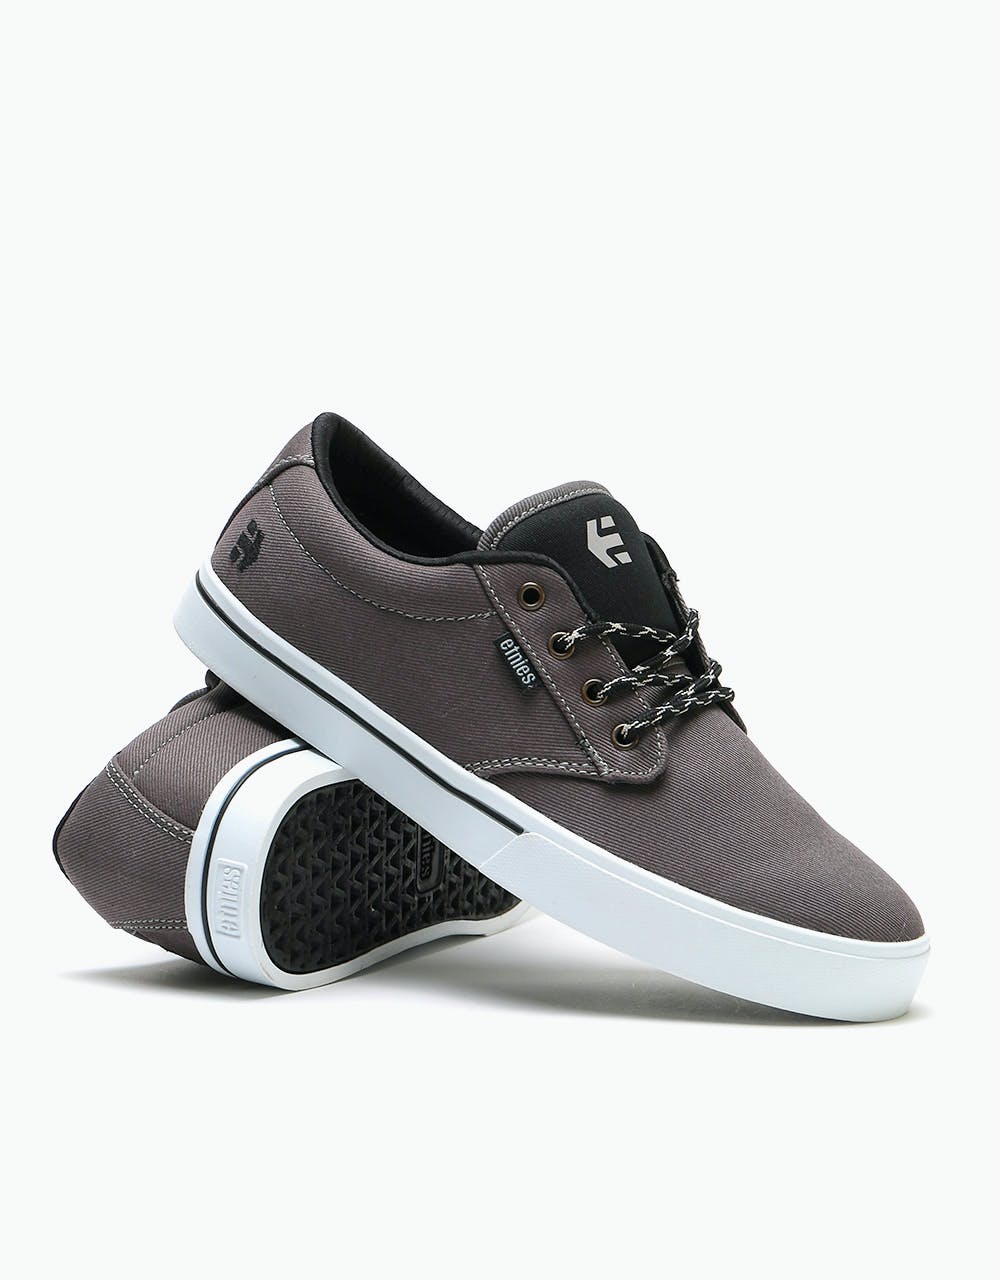 Etnies Jameson 2 Eco Skate Shoes - Grey/Black/Gold